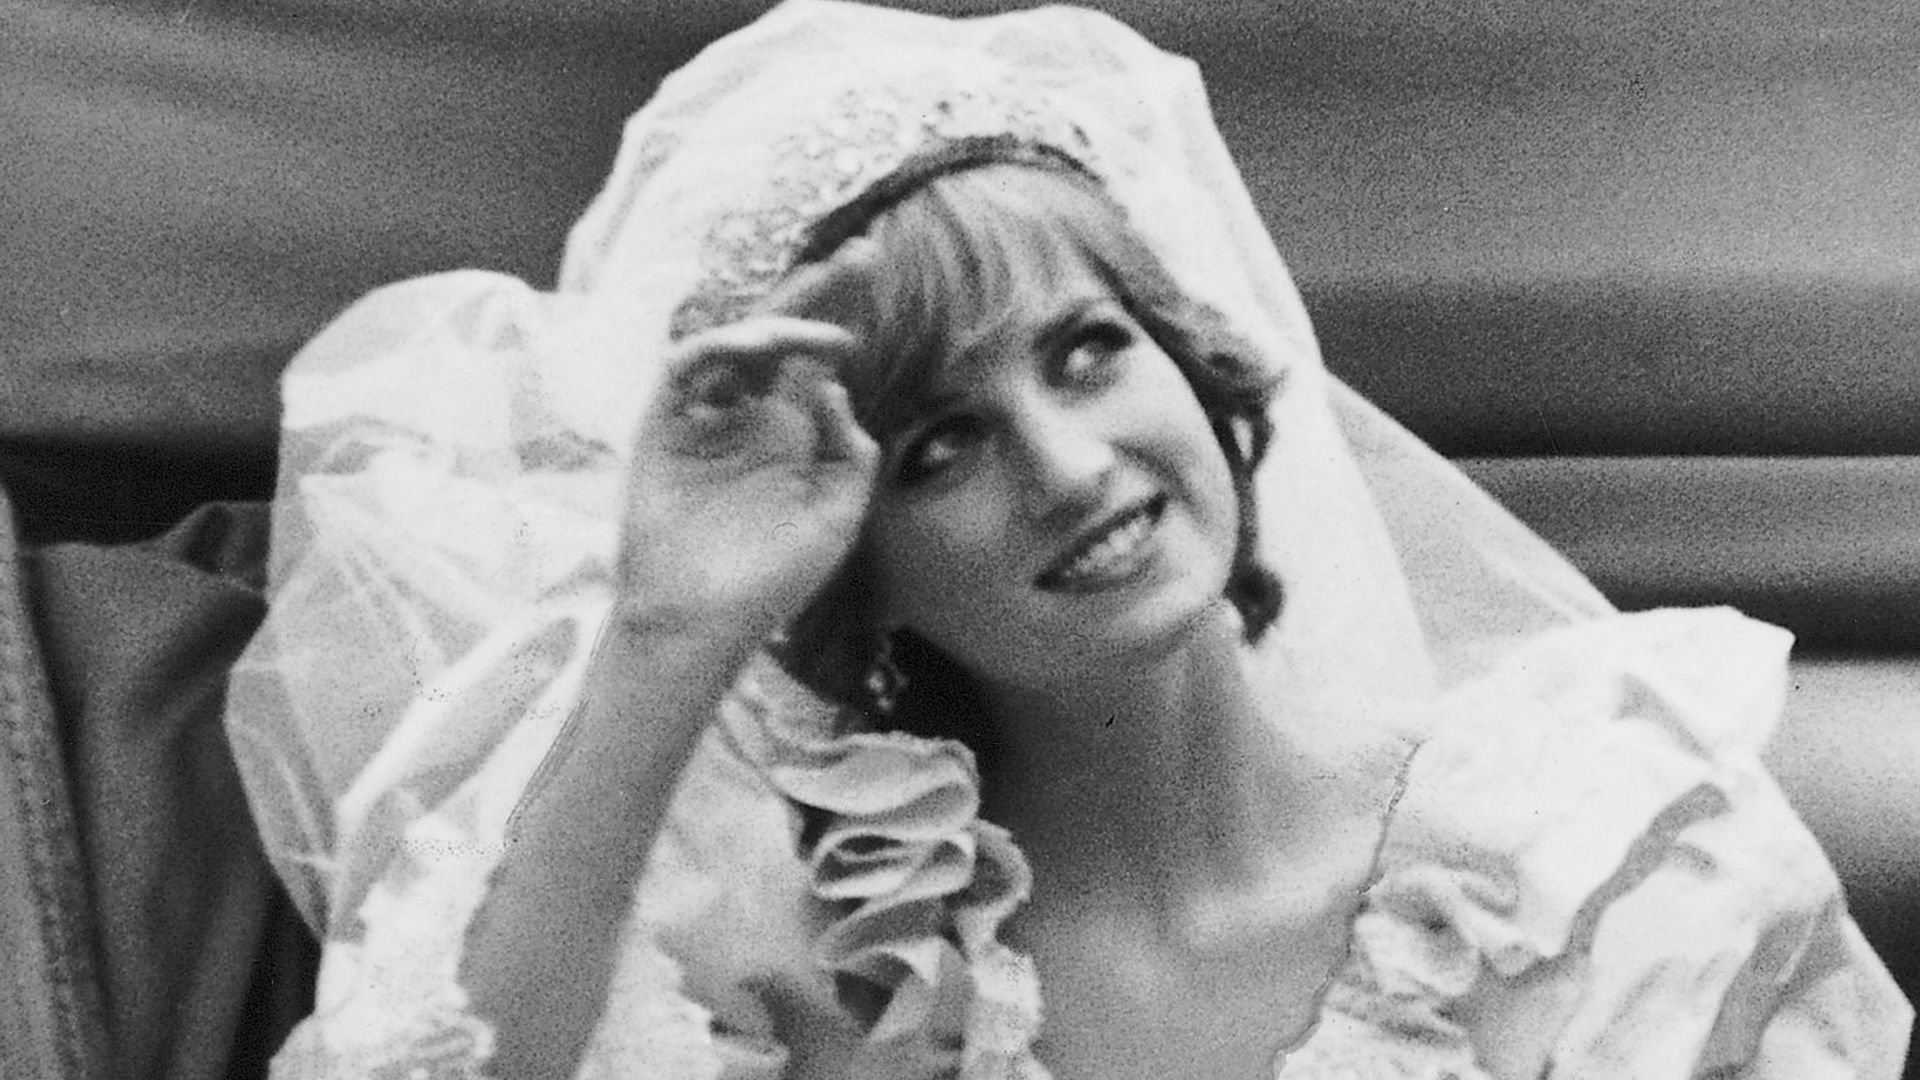 Princess Diana touching her tiara in her wedding carriage